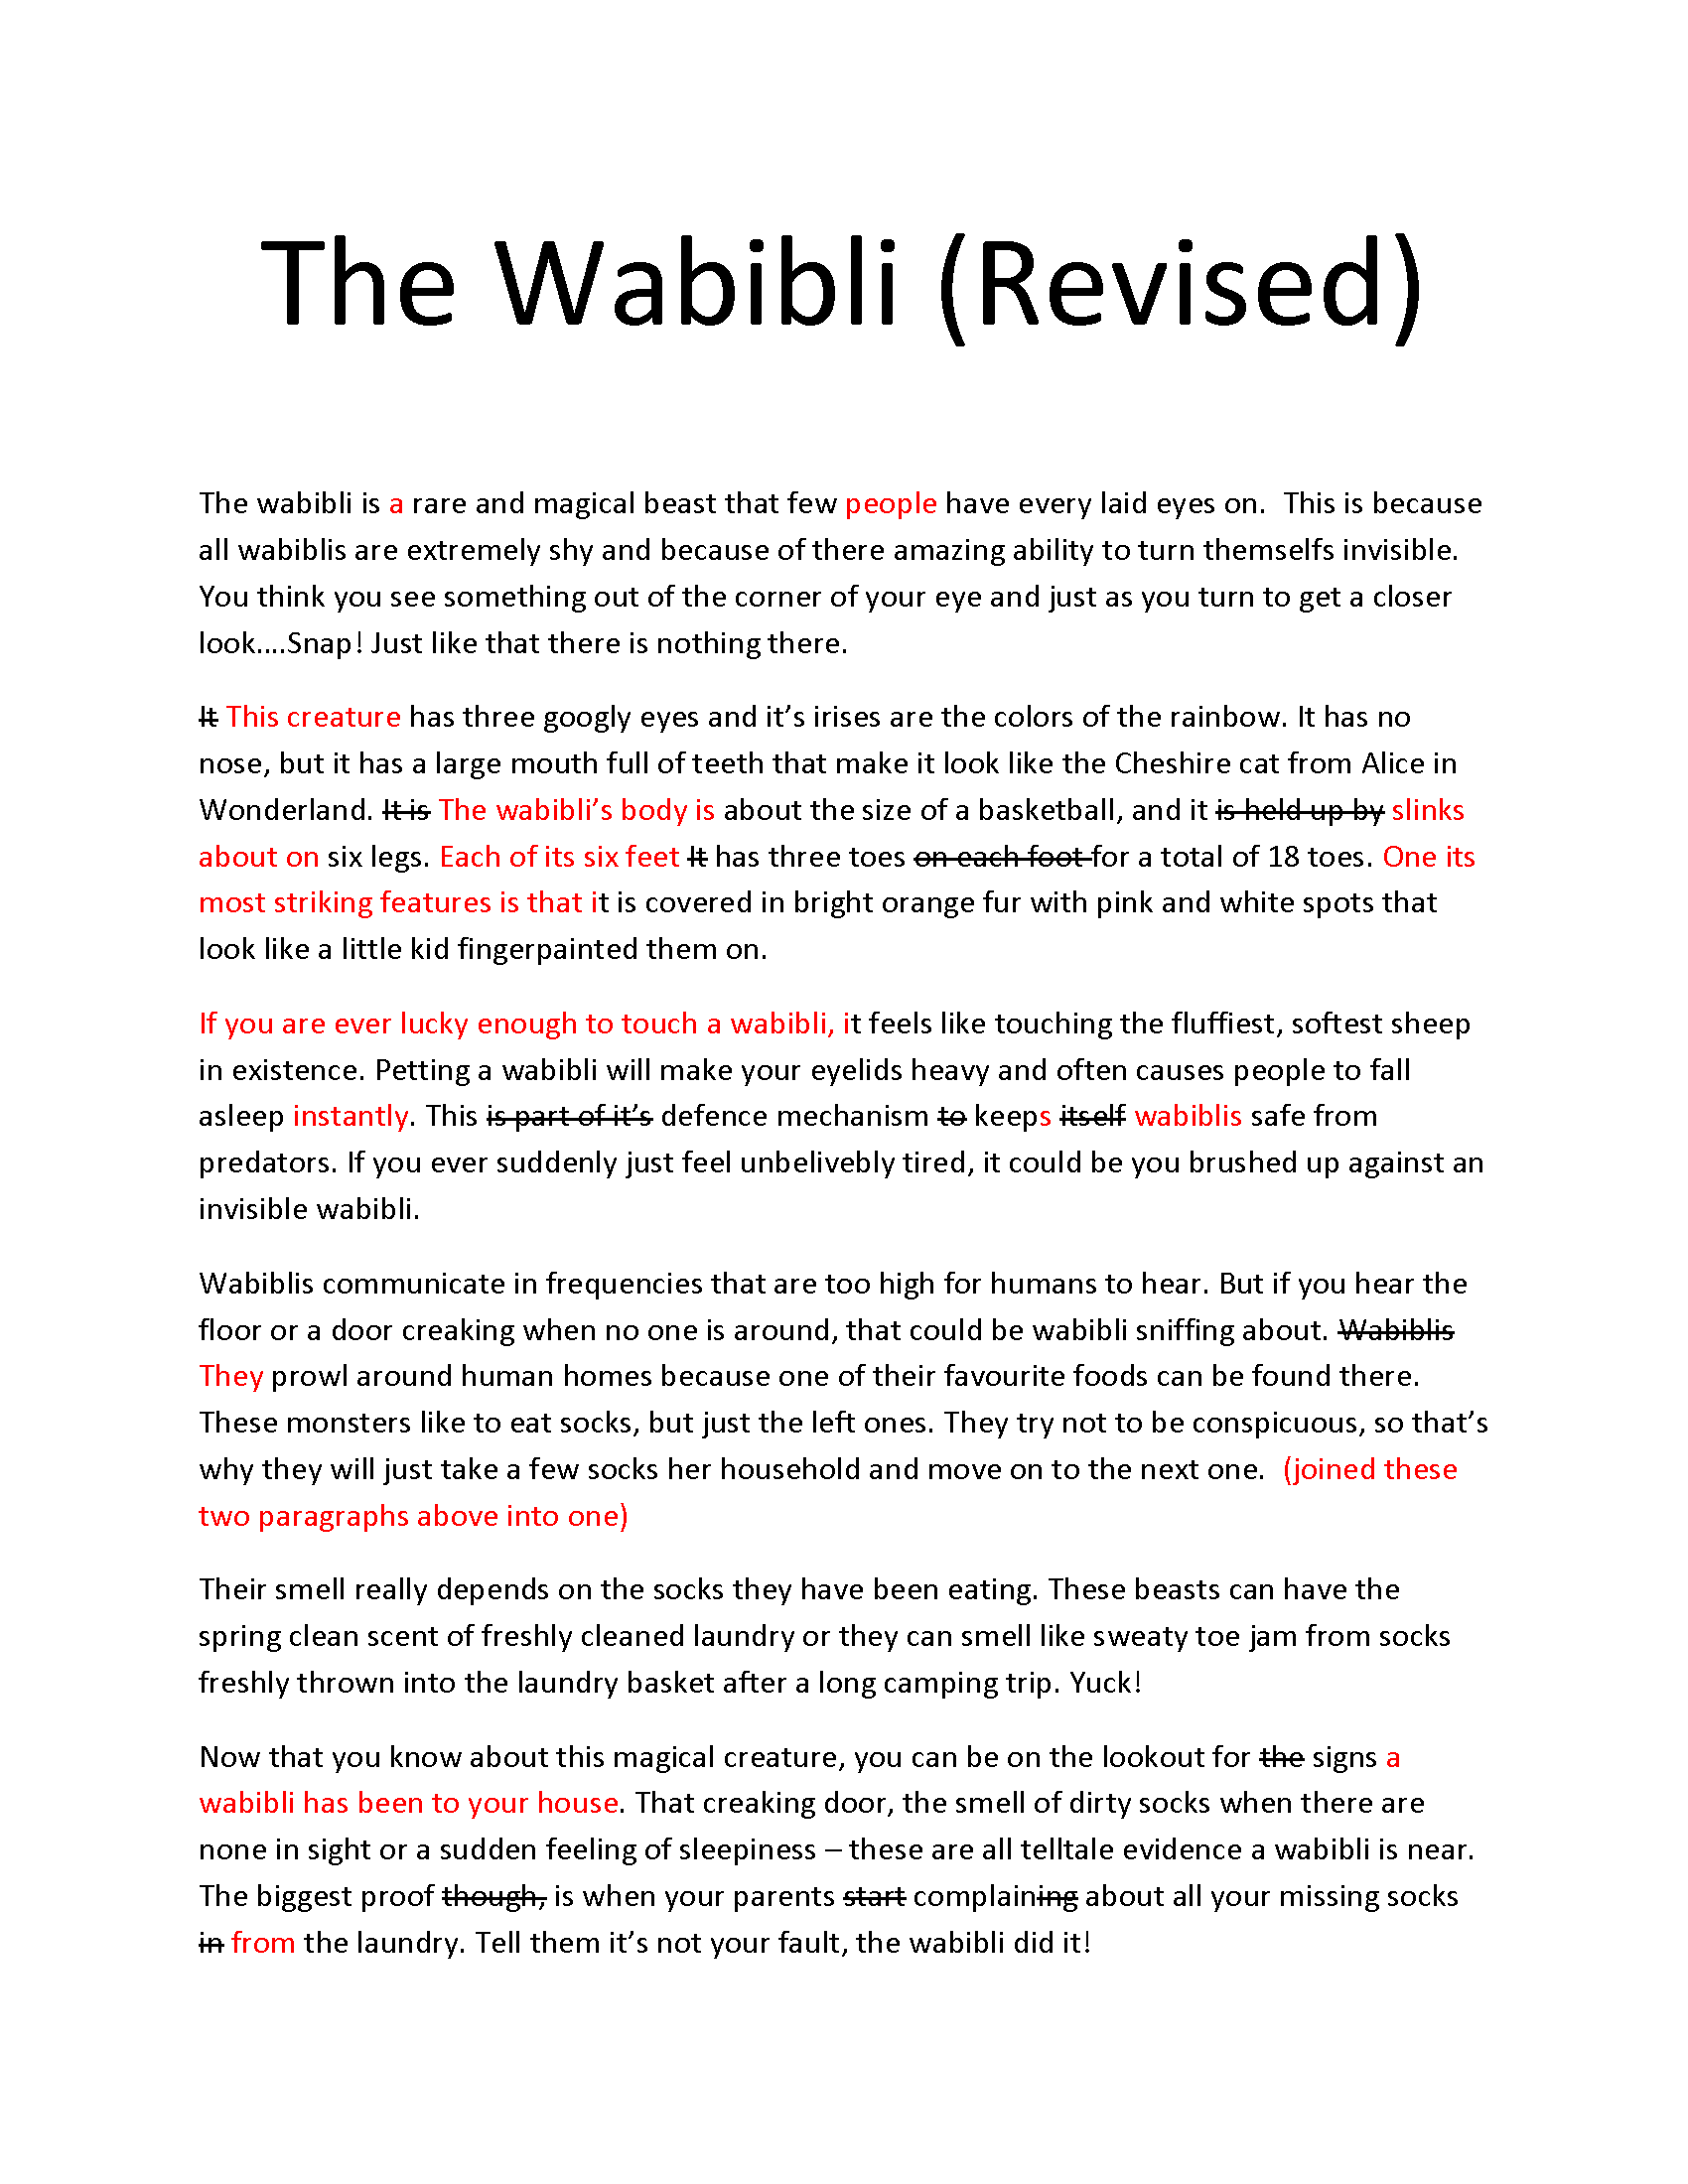 The Wabibli Revised